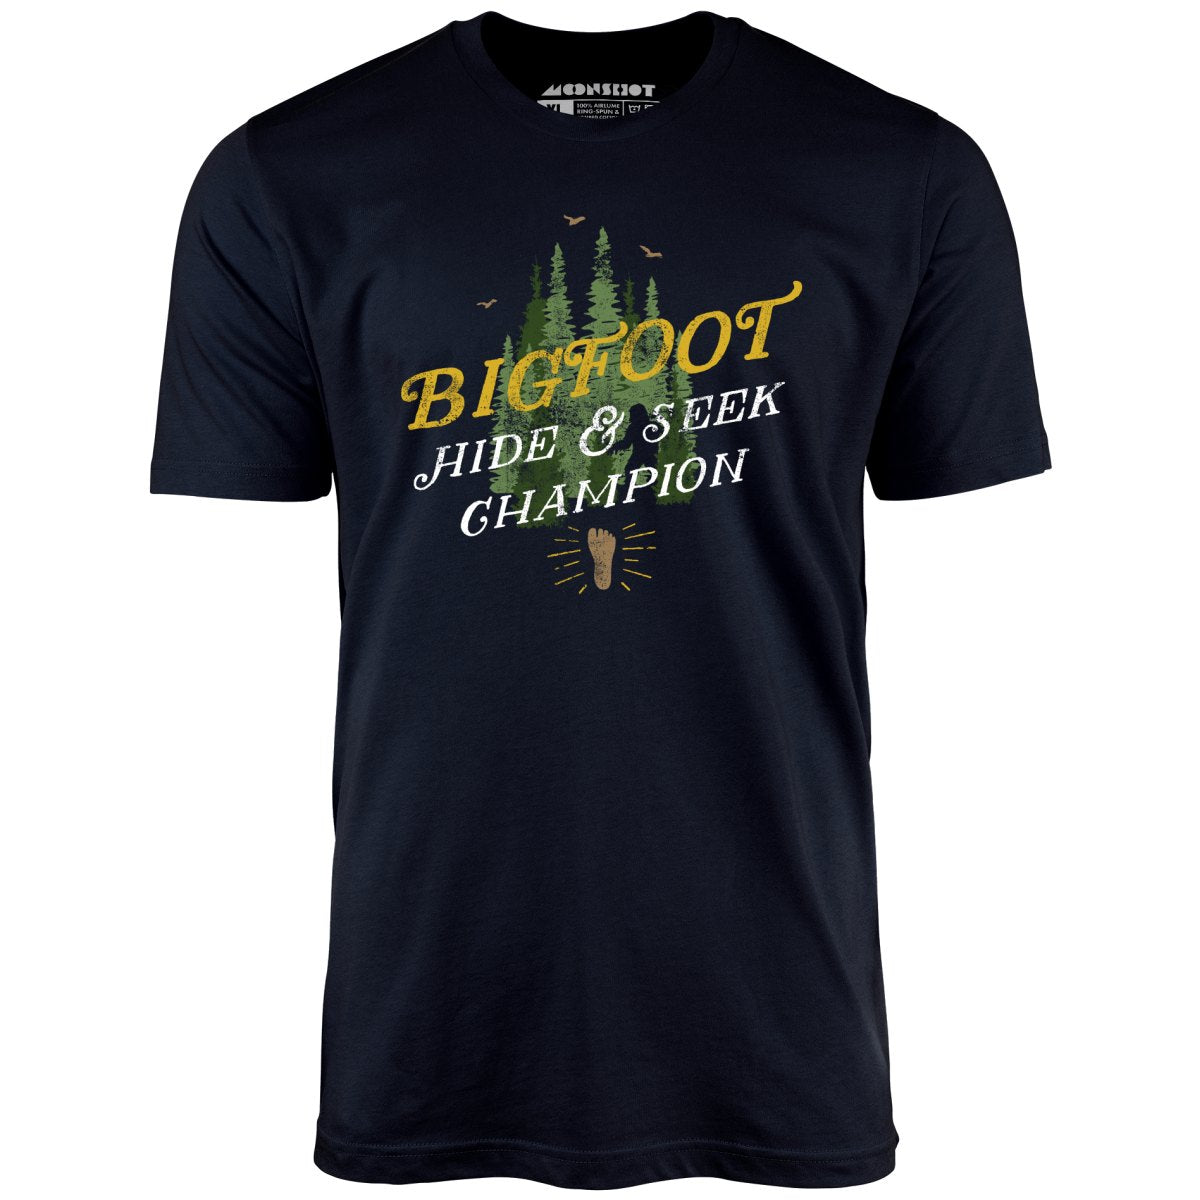 Bigfoot Hide & Seek Champion - Unisex T-Shirt